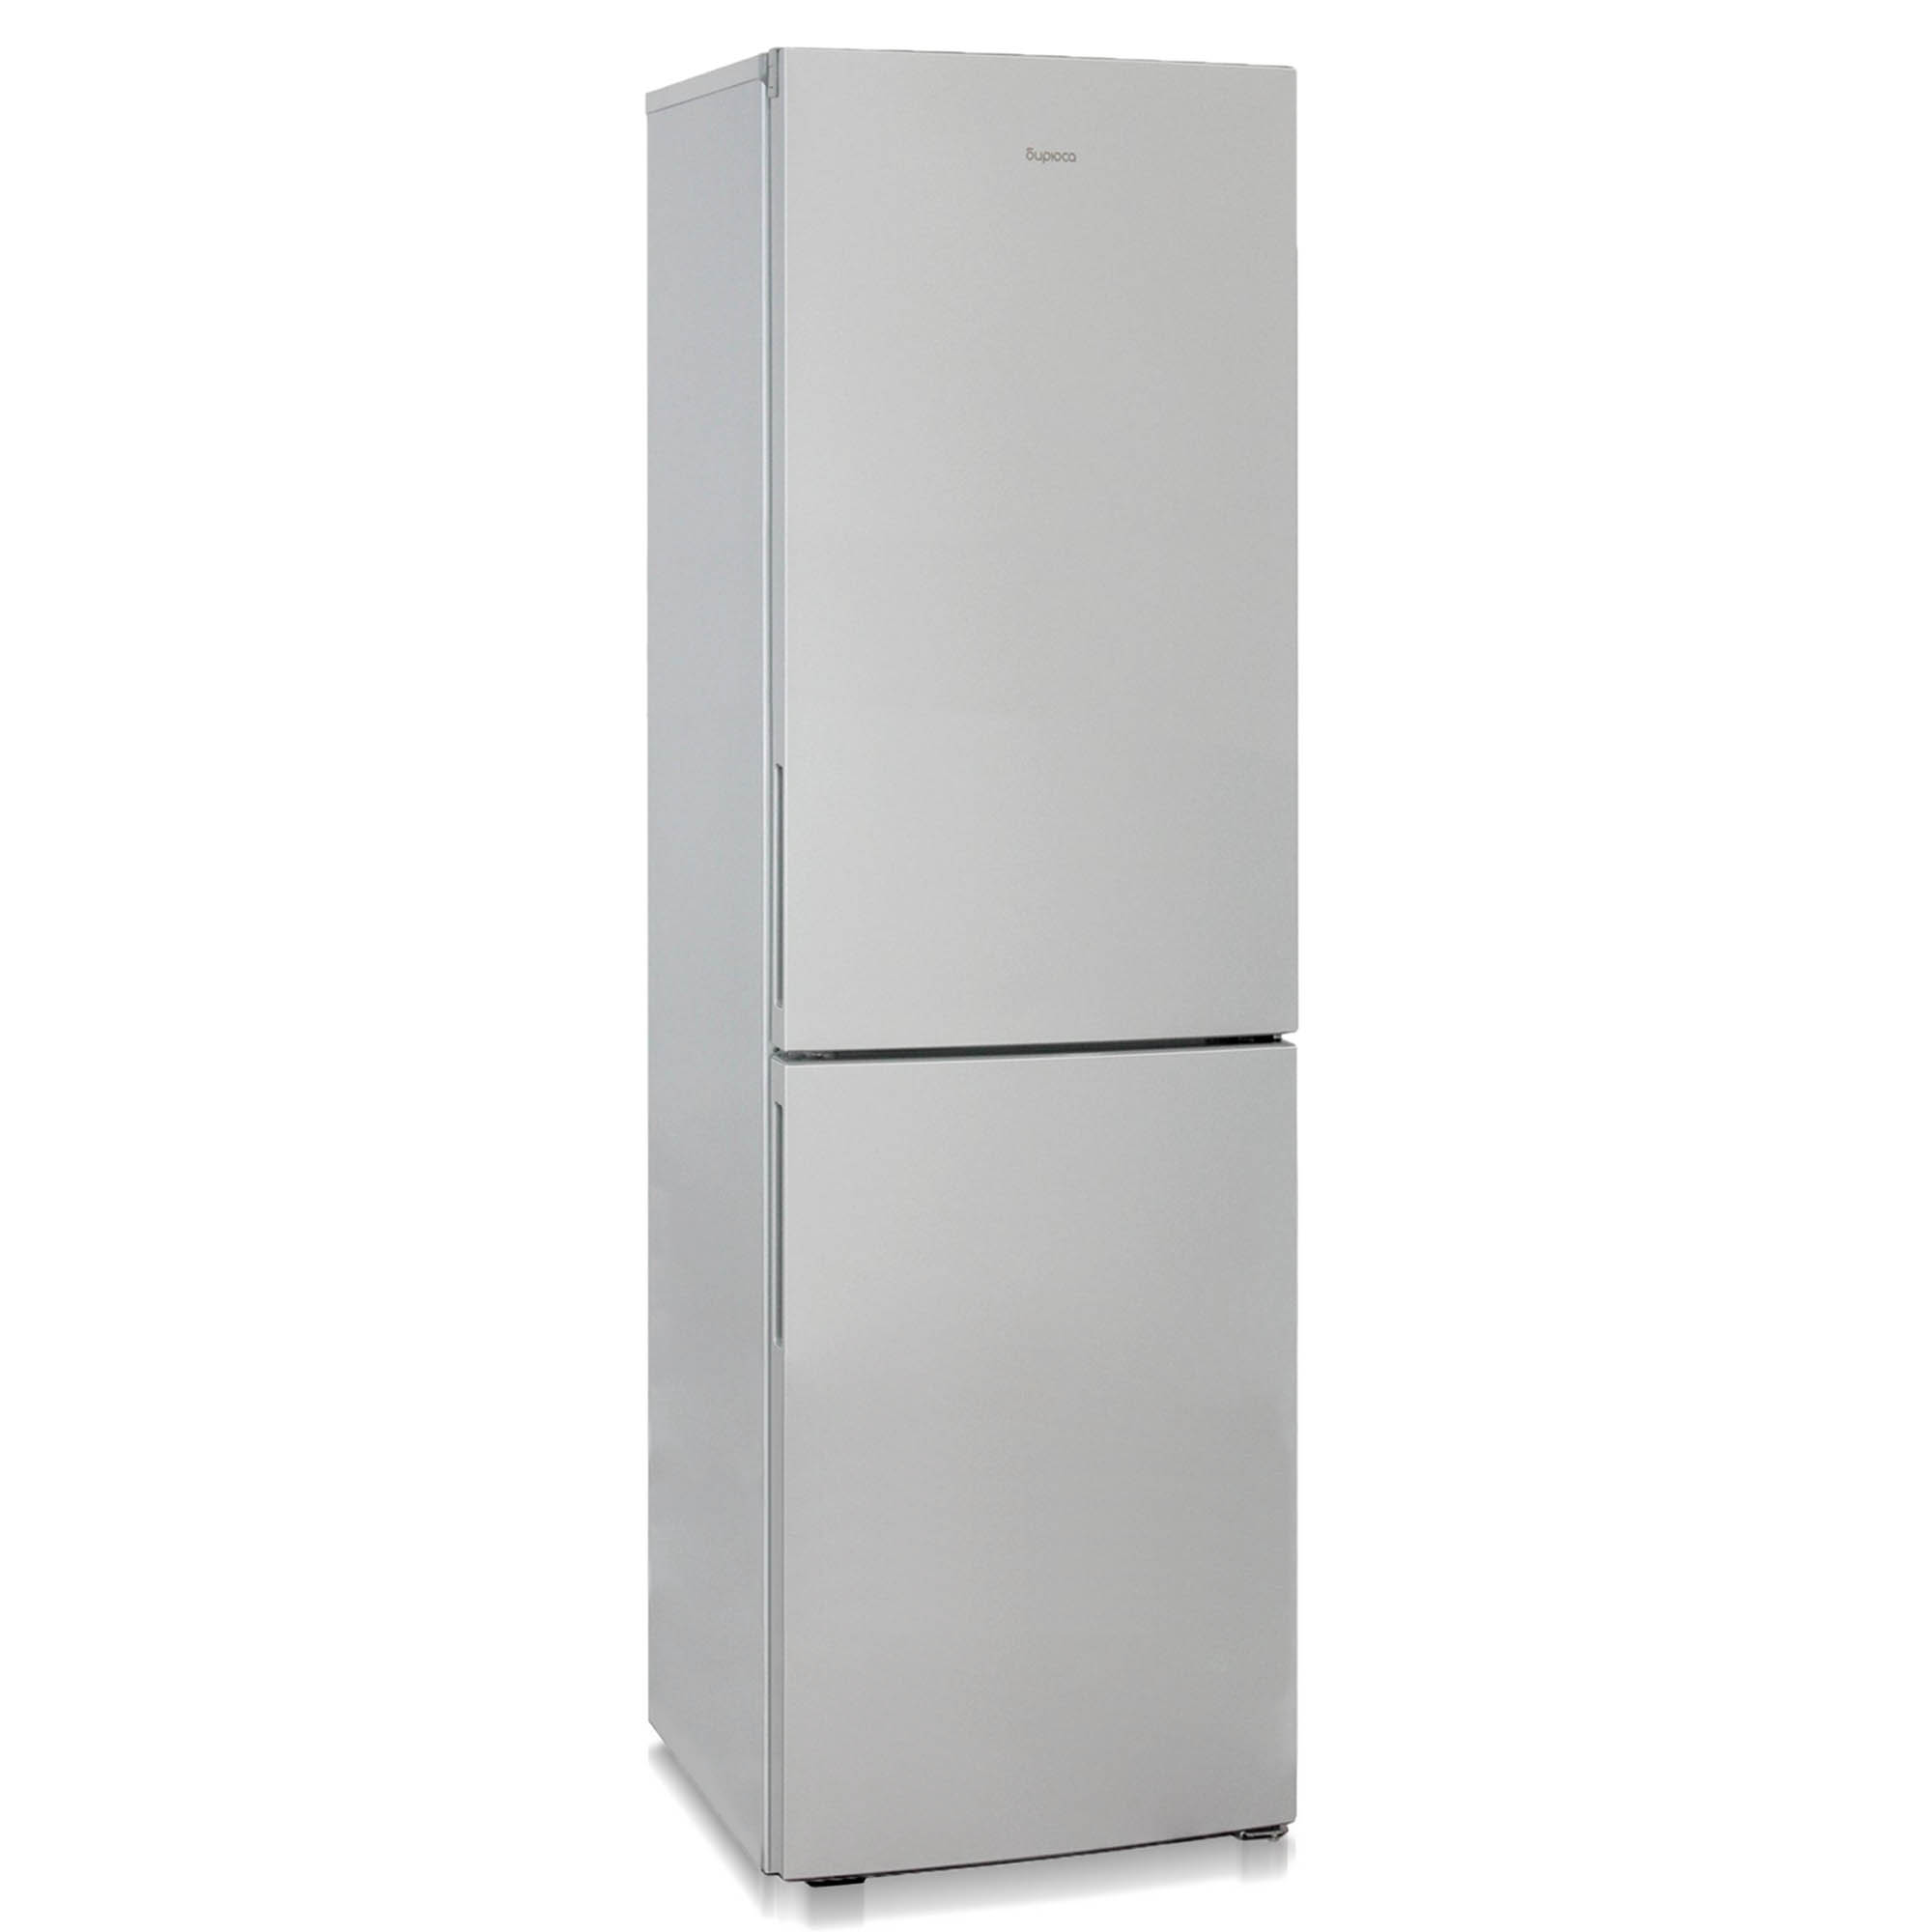 Холодильник Бирюса M6049 серый